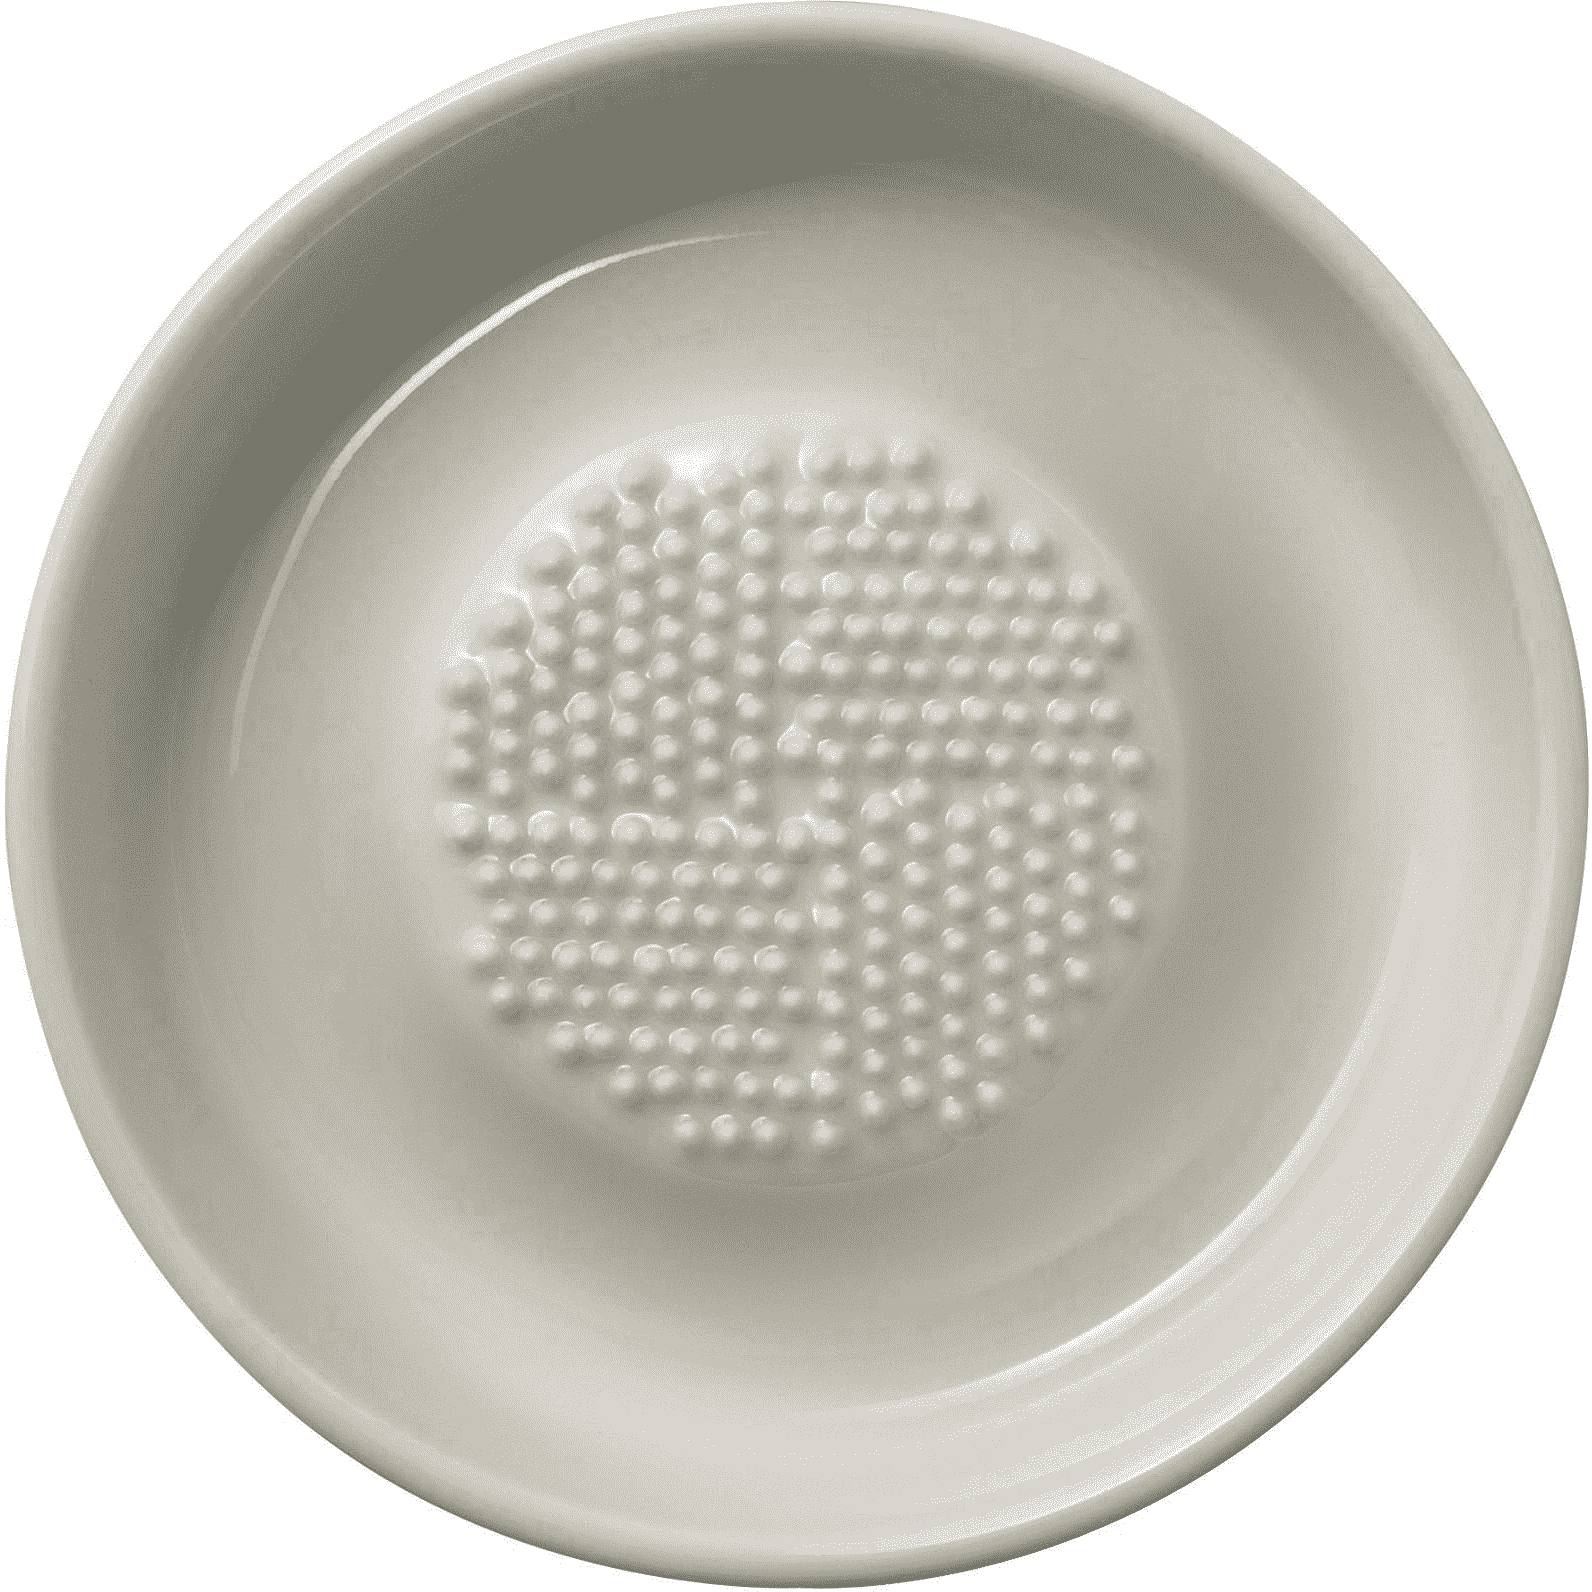  Kyocera Advanced Ceramic Multi Grater, Black : Home & Kitchen